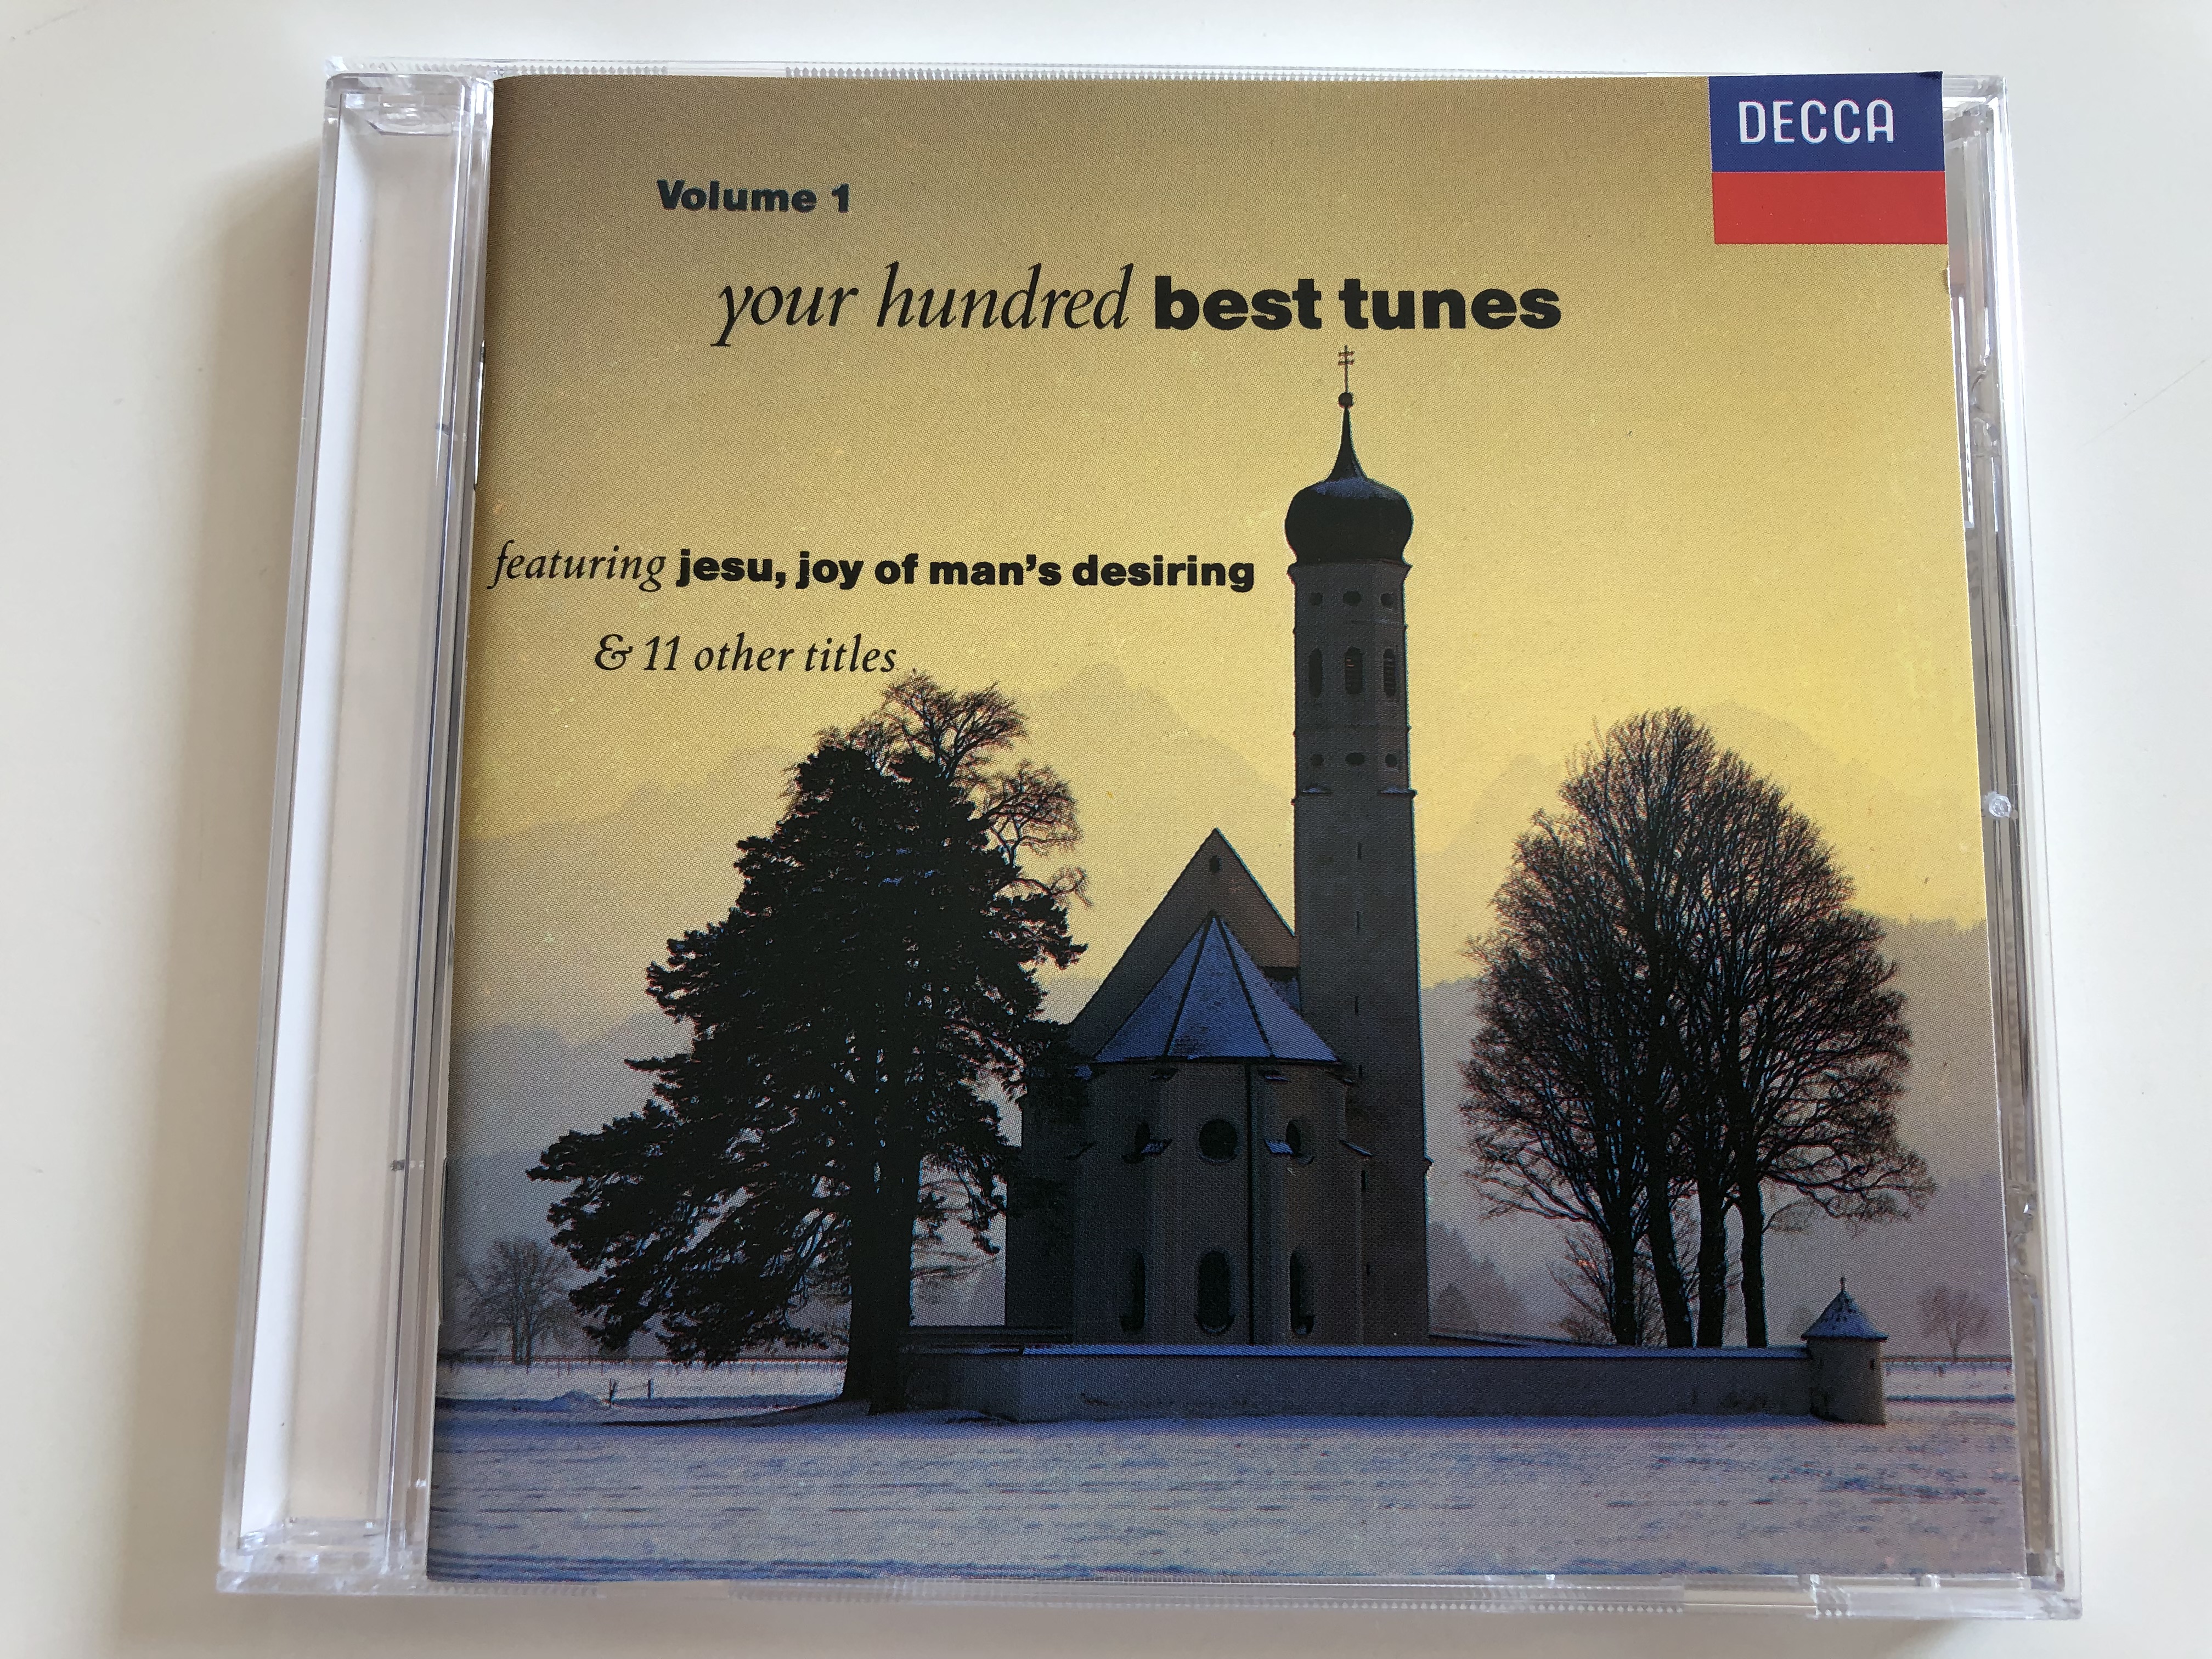 your-hundred-best-tunes-vol.-1-featuring-jesu-joy-of-man-s-desiring-11-other-titles-decca-audio-cd-1990-425-847-2-1-.jpg